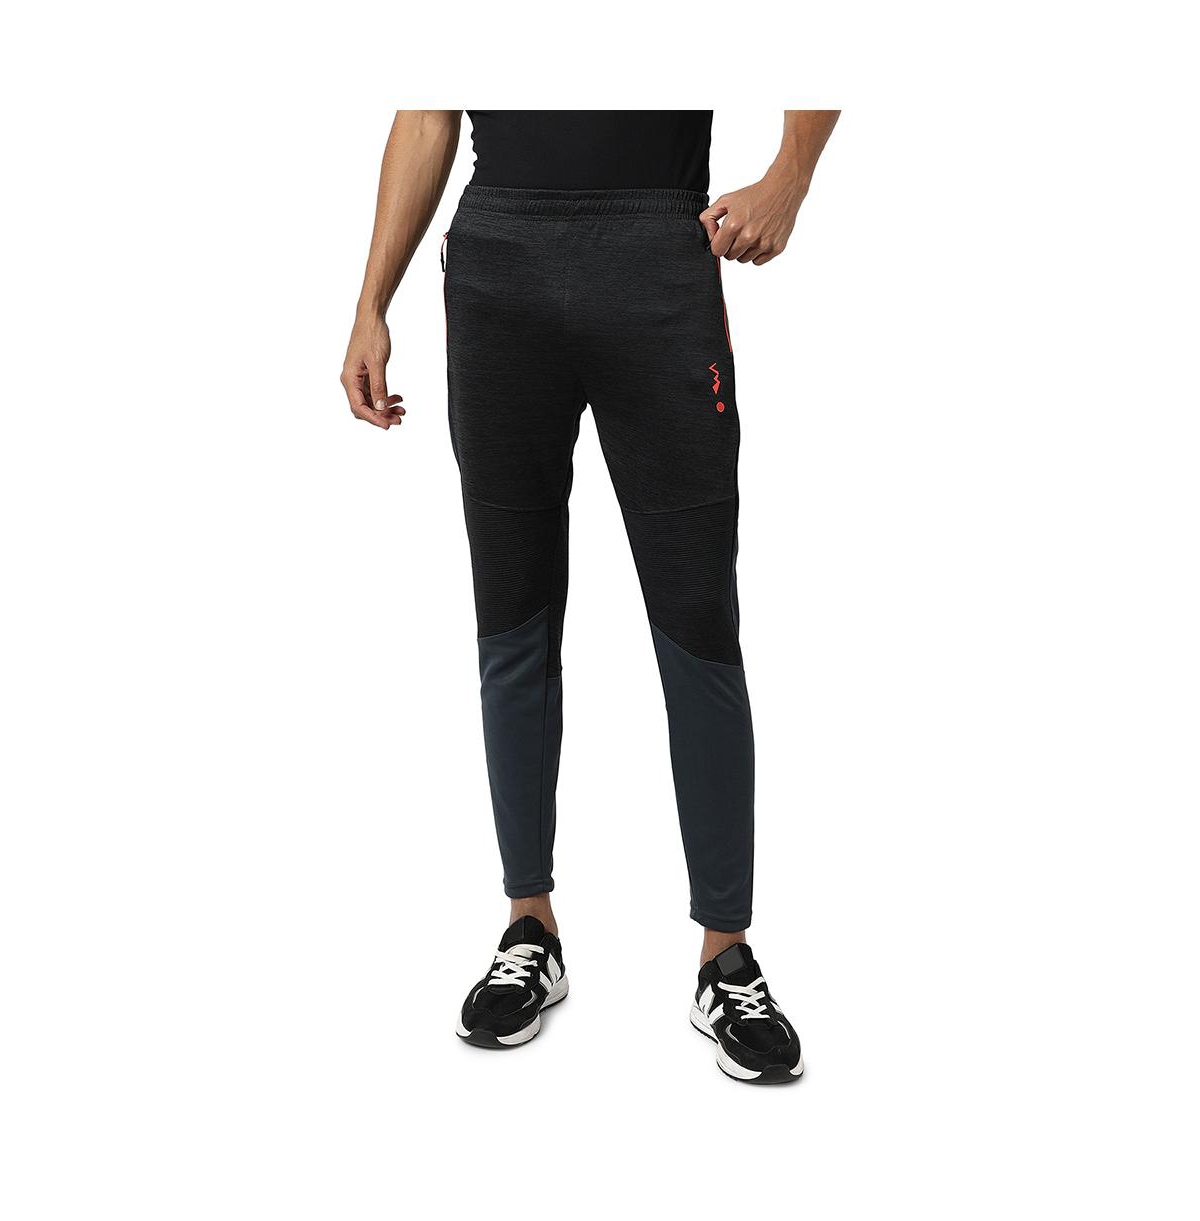 Men's Carbon Black Side-Striped Track pants - Carbon black